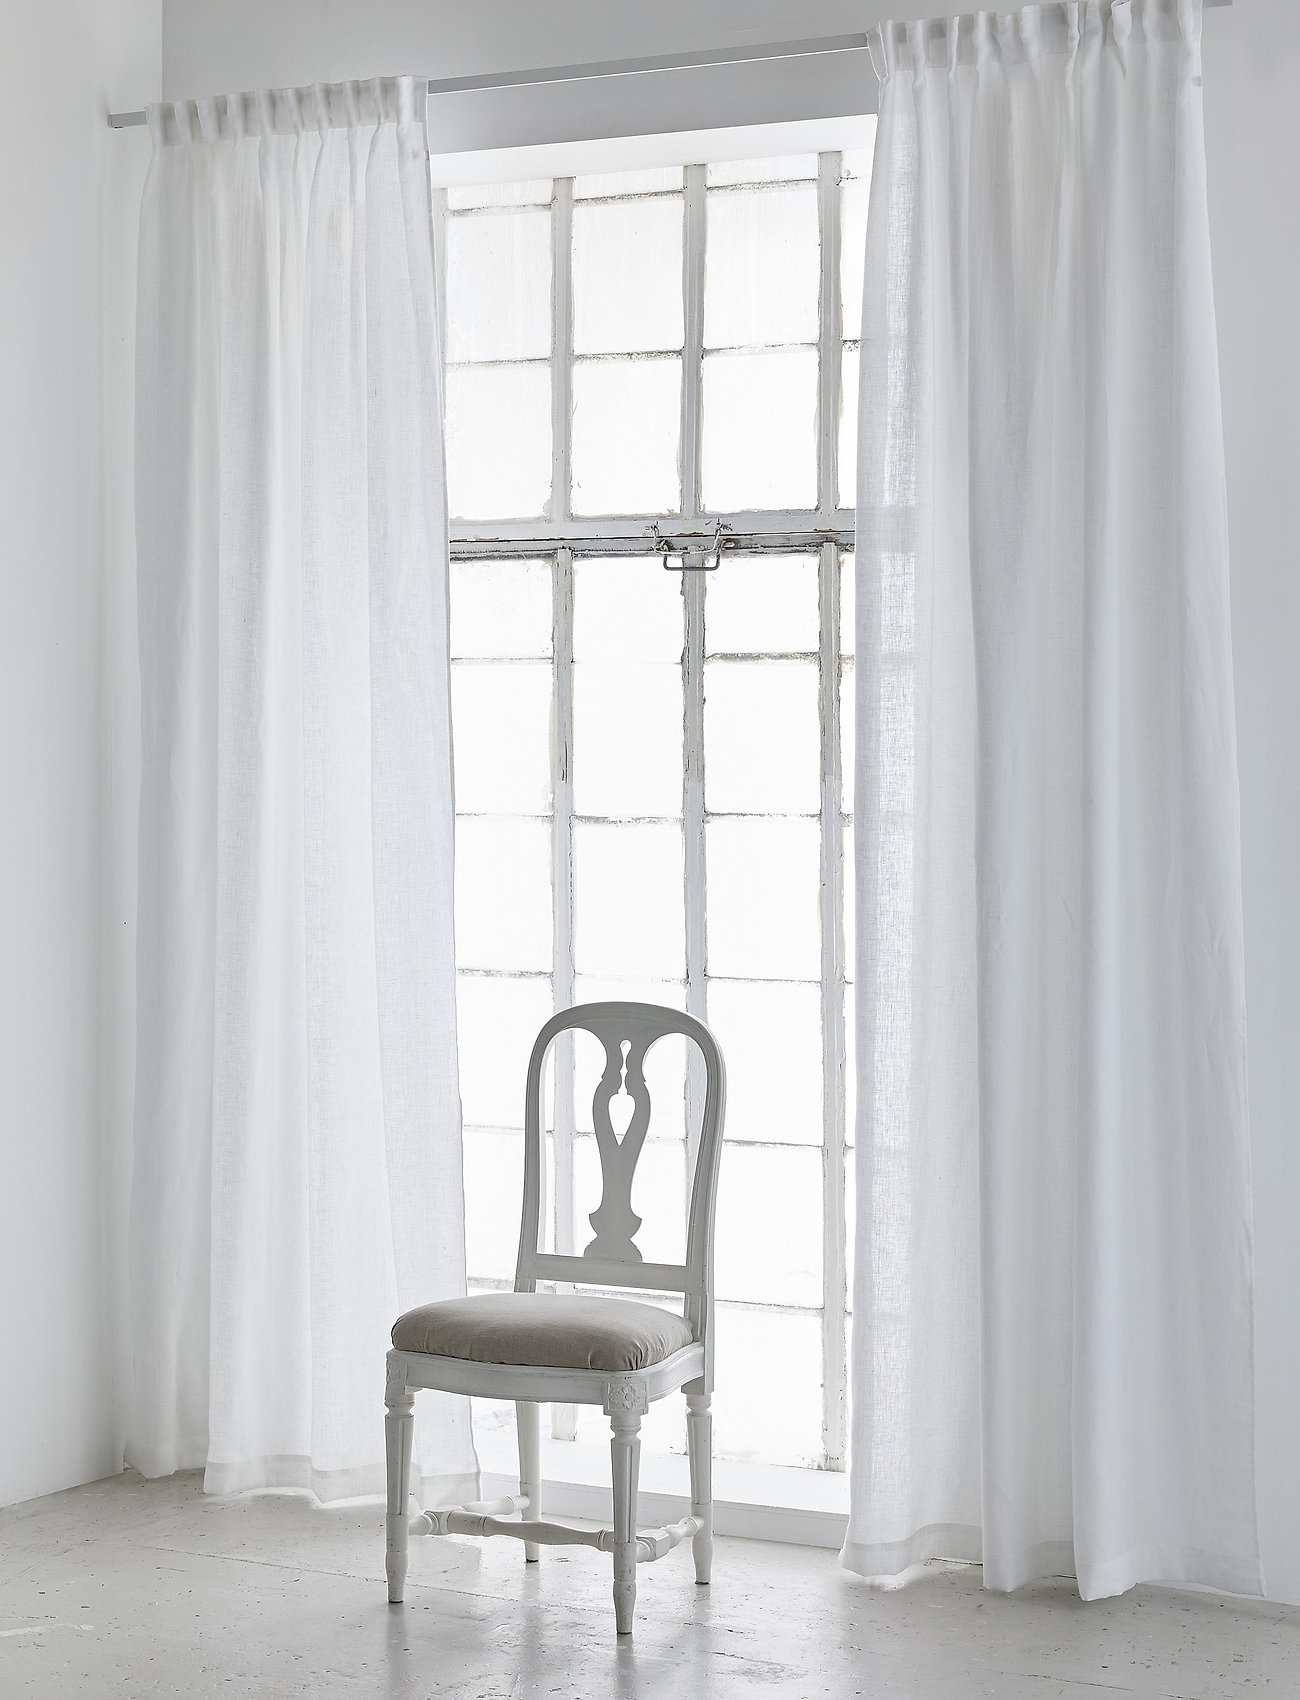 Himla - Springtime Curtain - fertiggardinen - white - 1